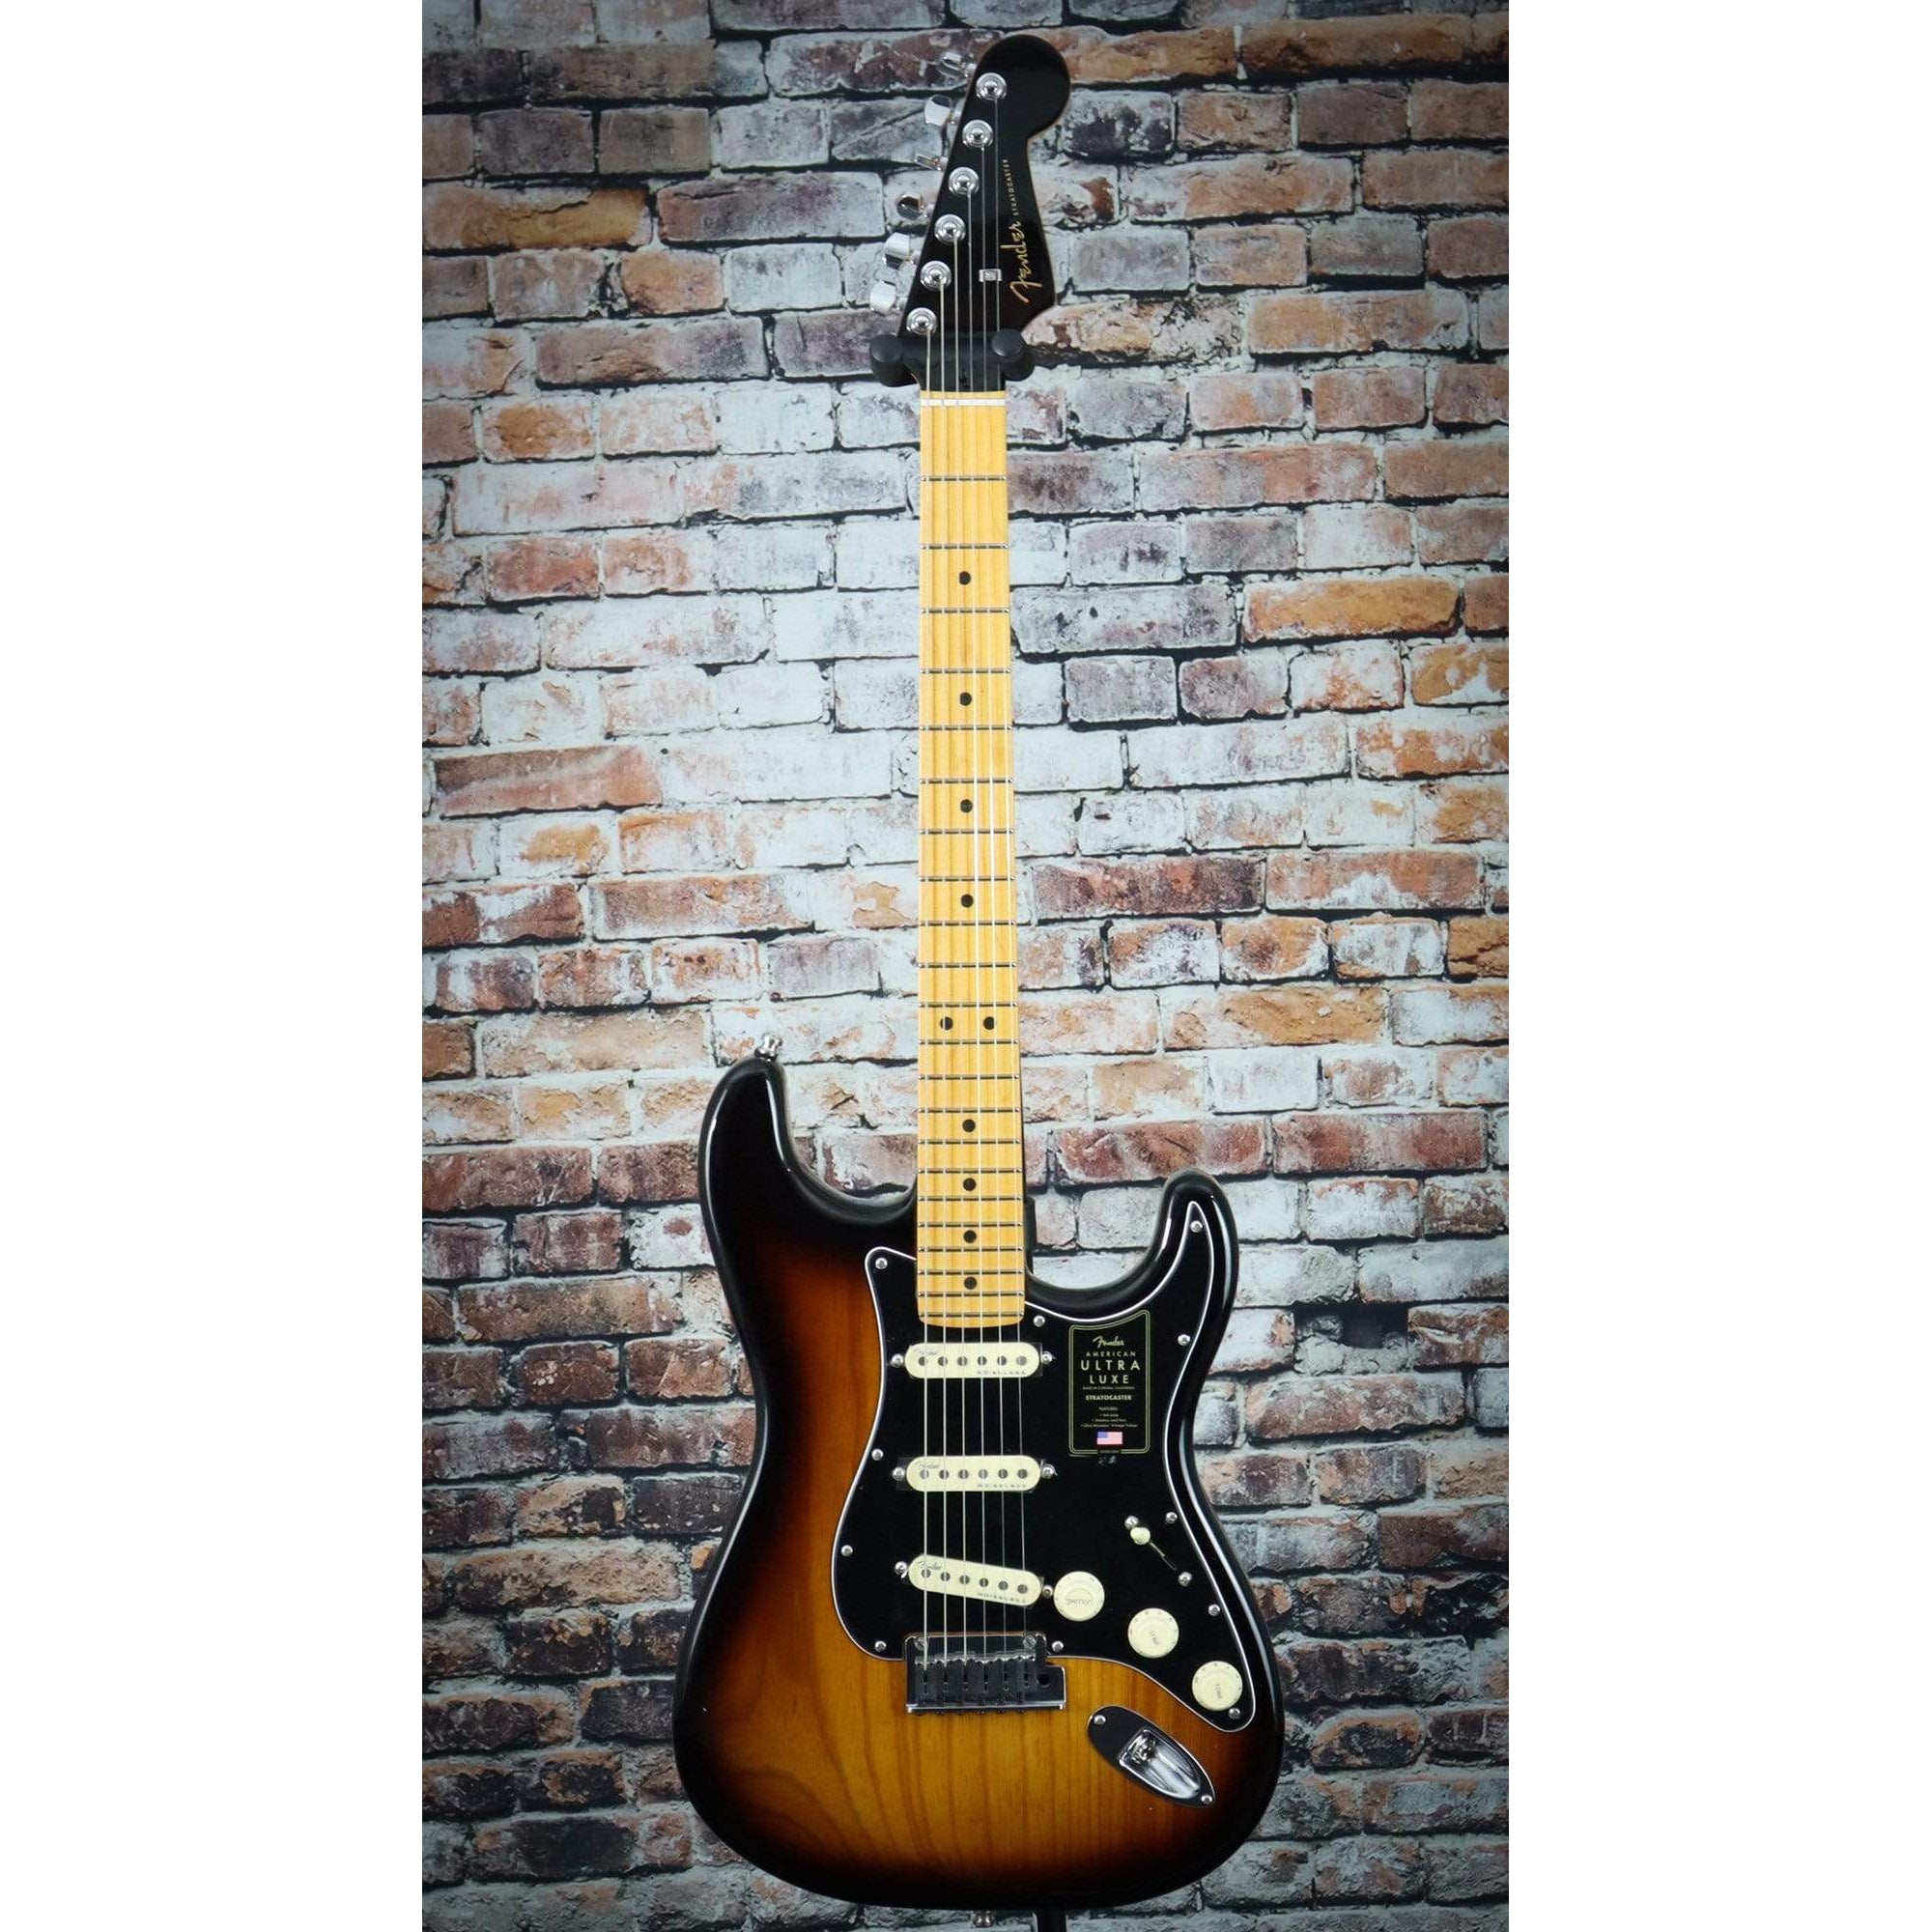 Fender American Ultra LUXE Stratocaster | 2-Color Sunburst